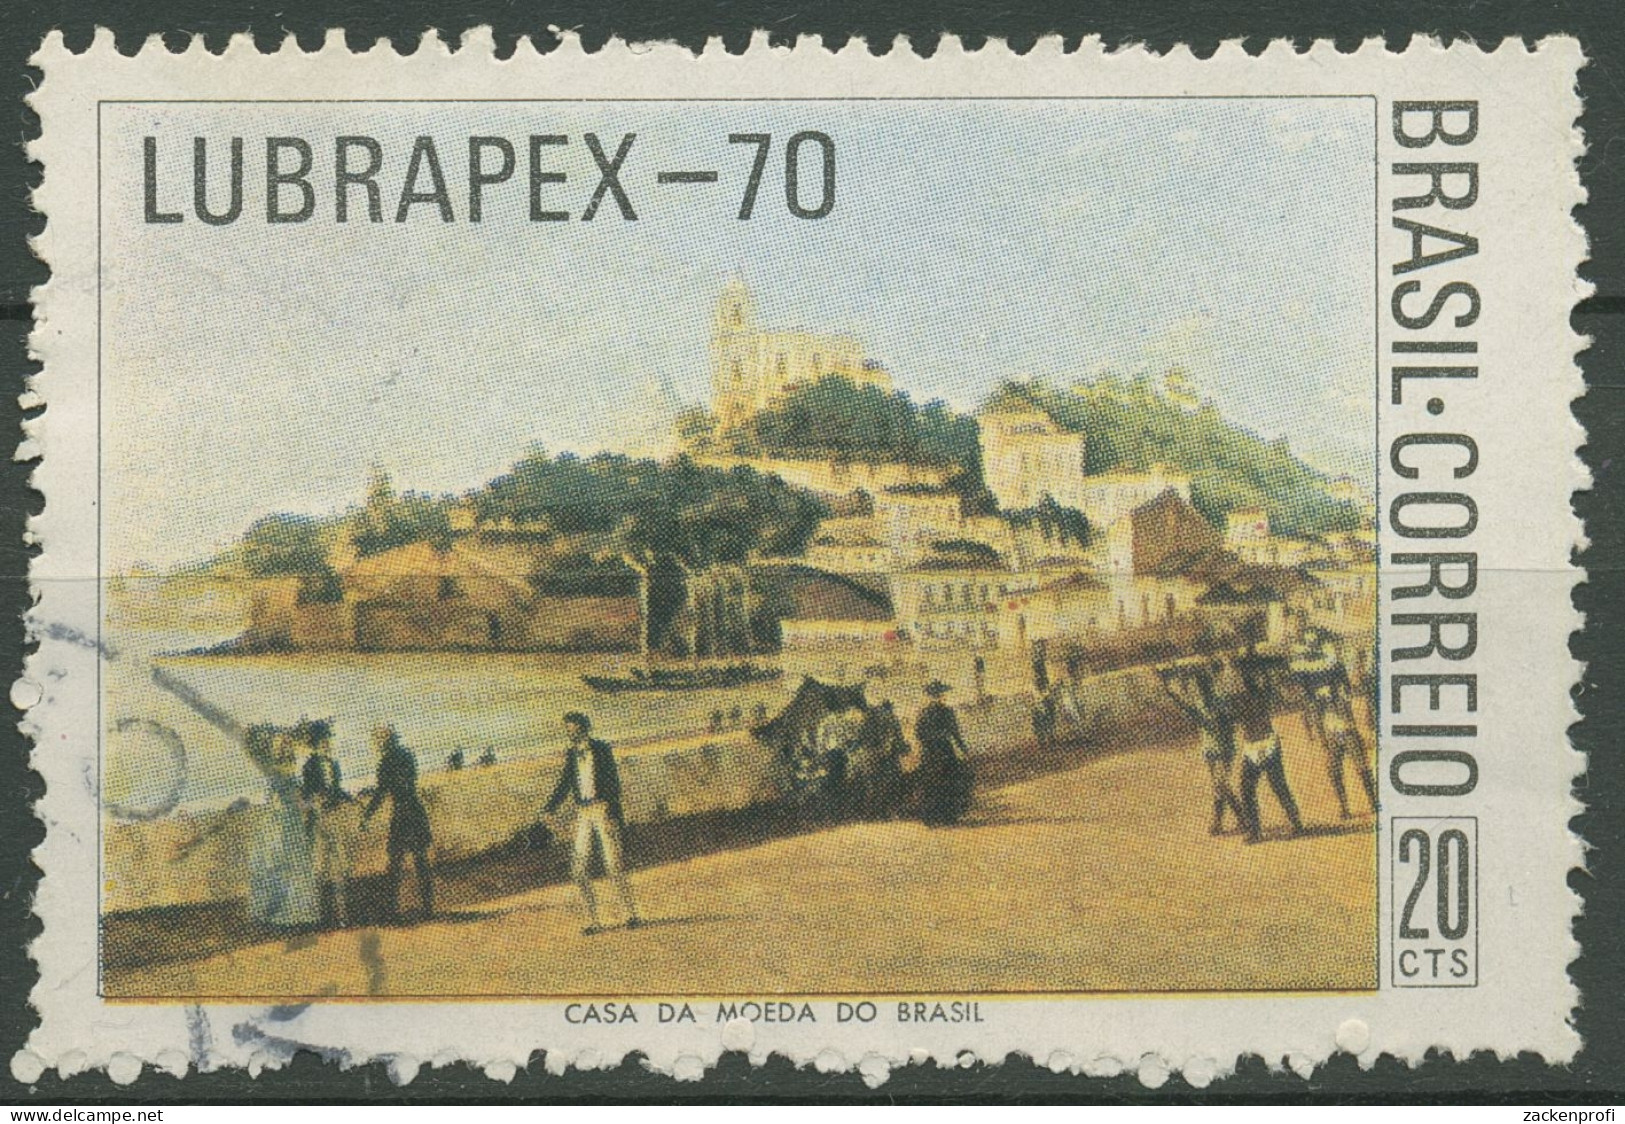 Brasilien 1970 LUBRAPEX Stadtansicht Rio De Janeiro 1270 Gestempelt - Used Stamps